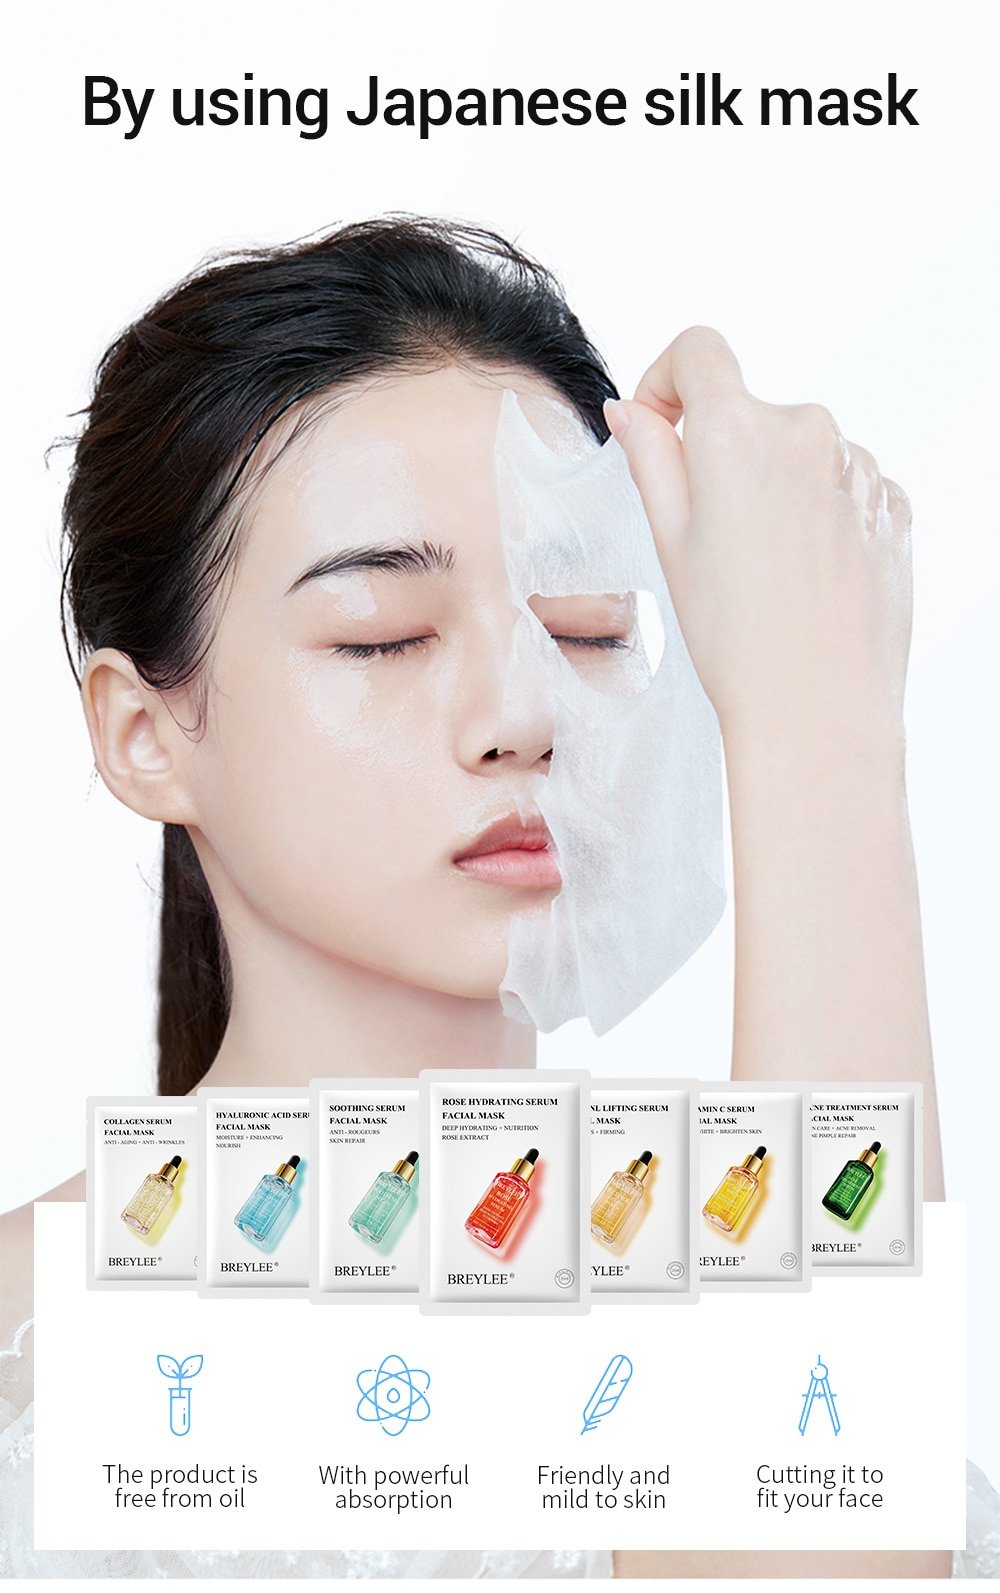 Collagen Facial Sheet Mask